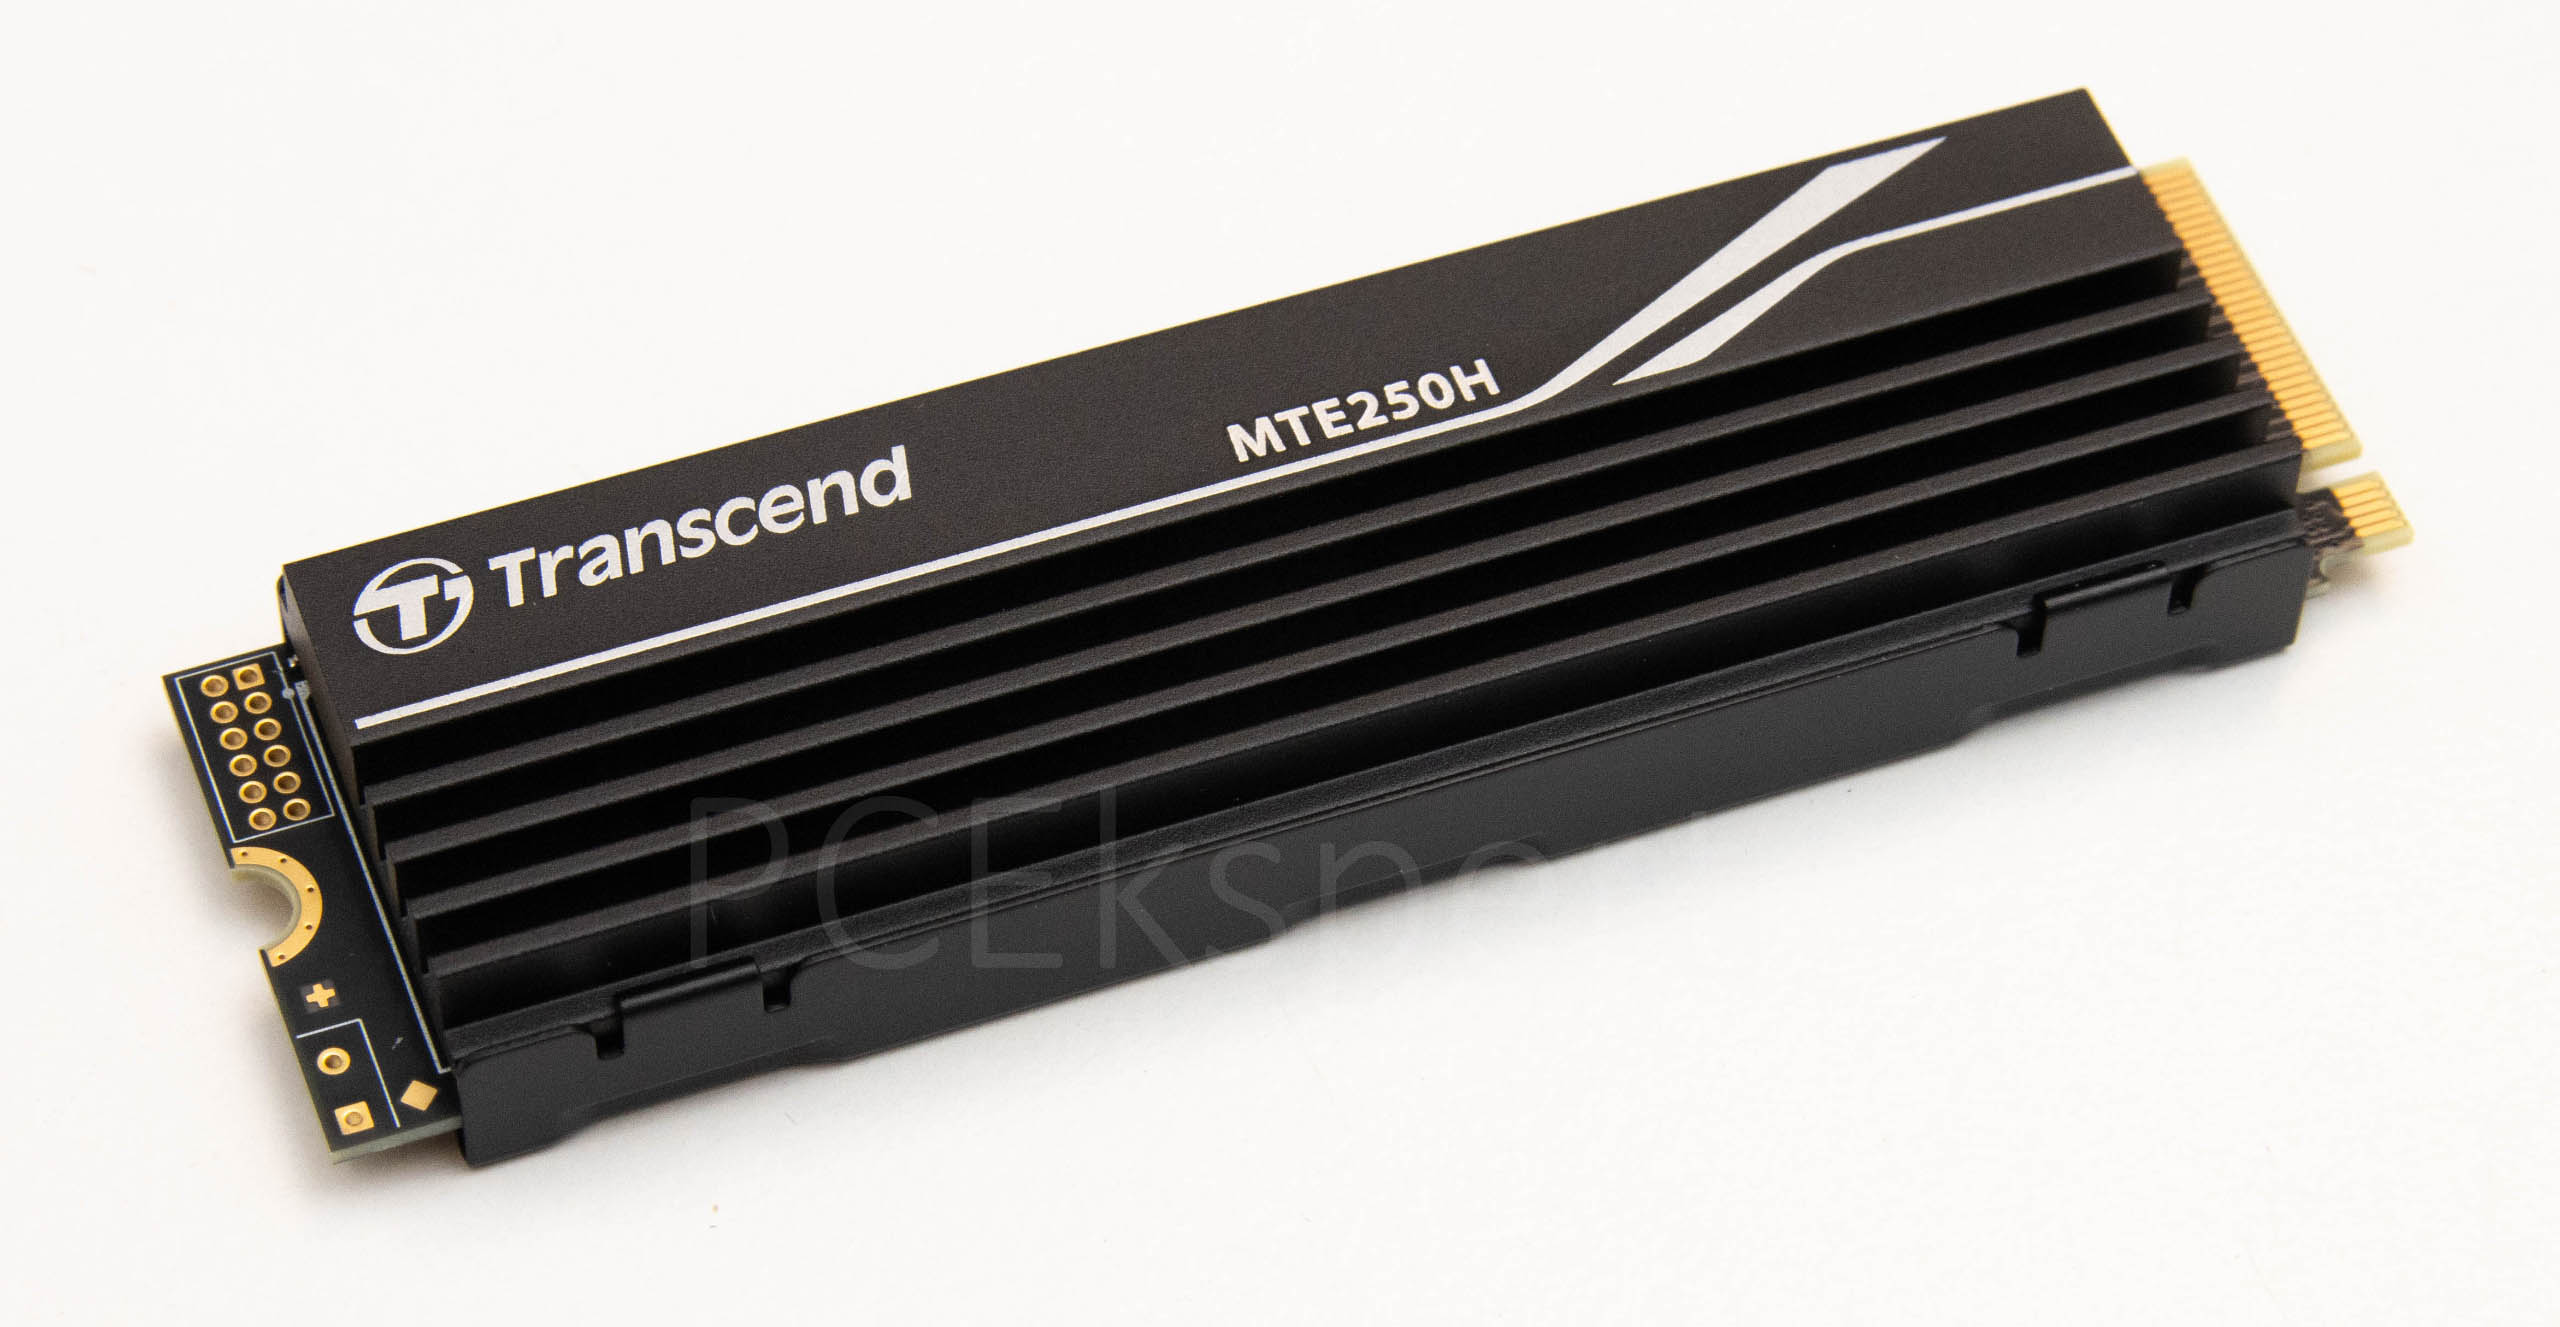 Transcend PCIe SSD MTE250H 1TB recenzija